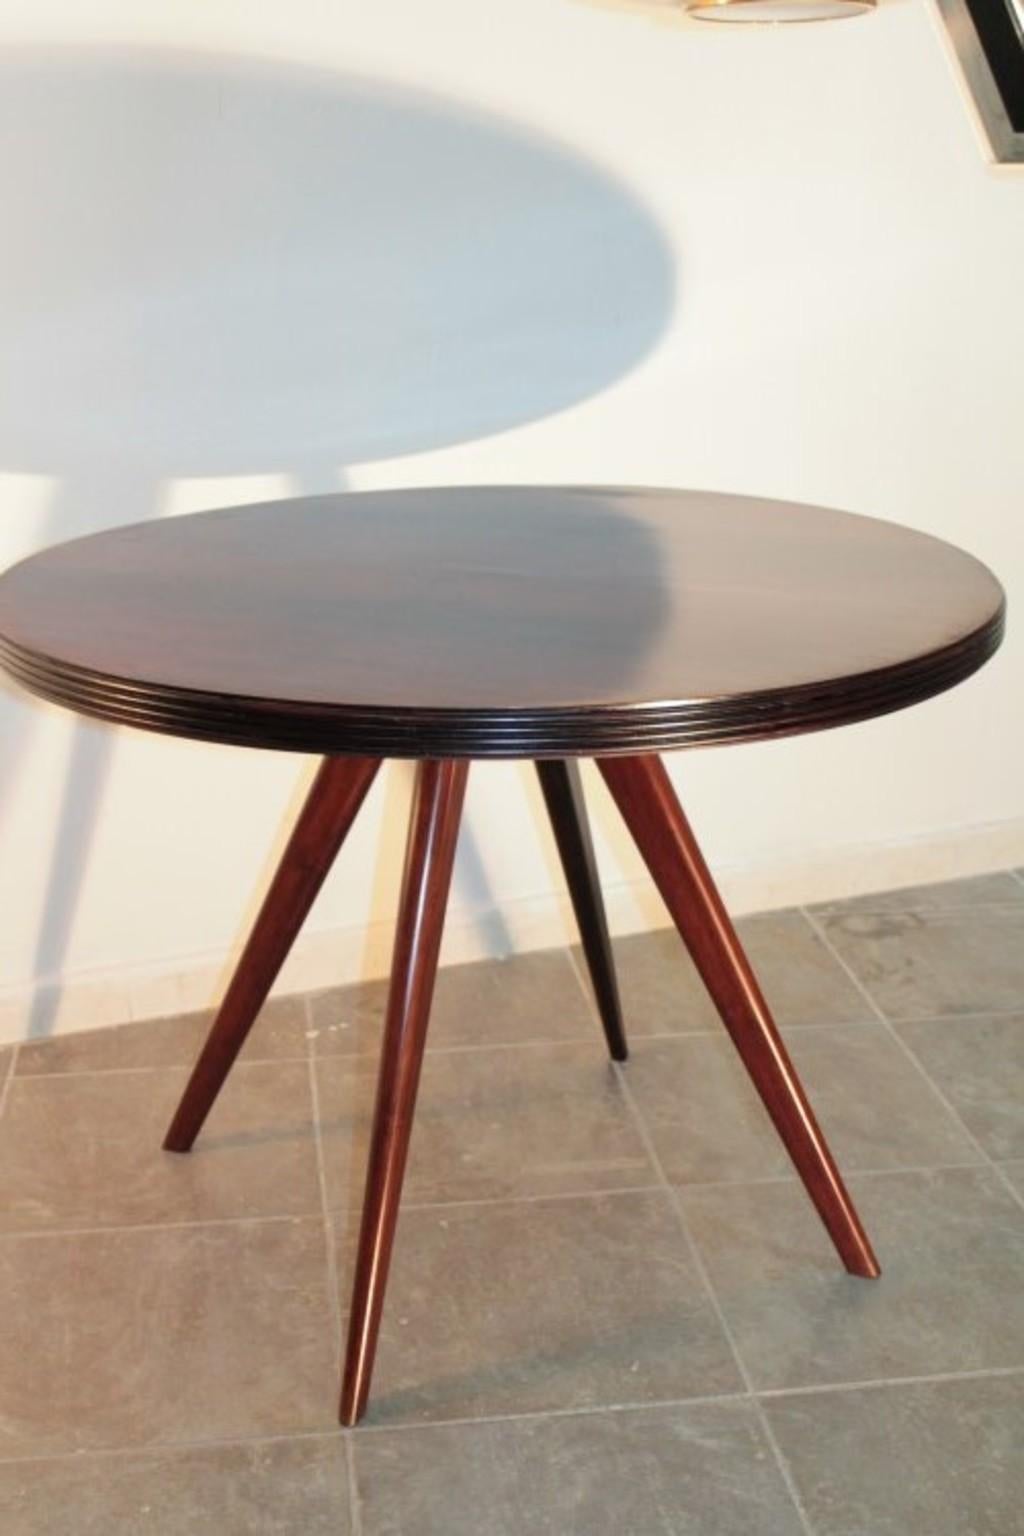 Wonderful rosewood round dining table circa 1950 design attributed to Ico Parisi.